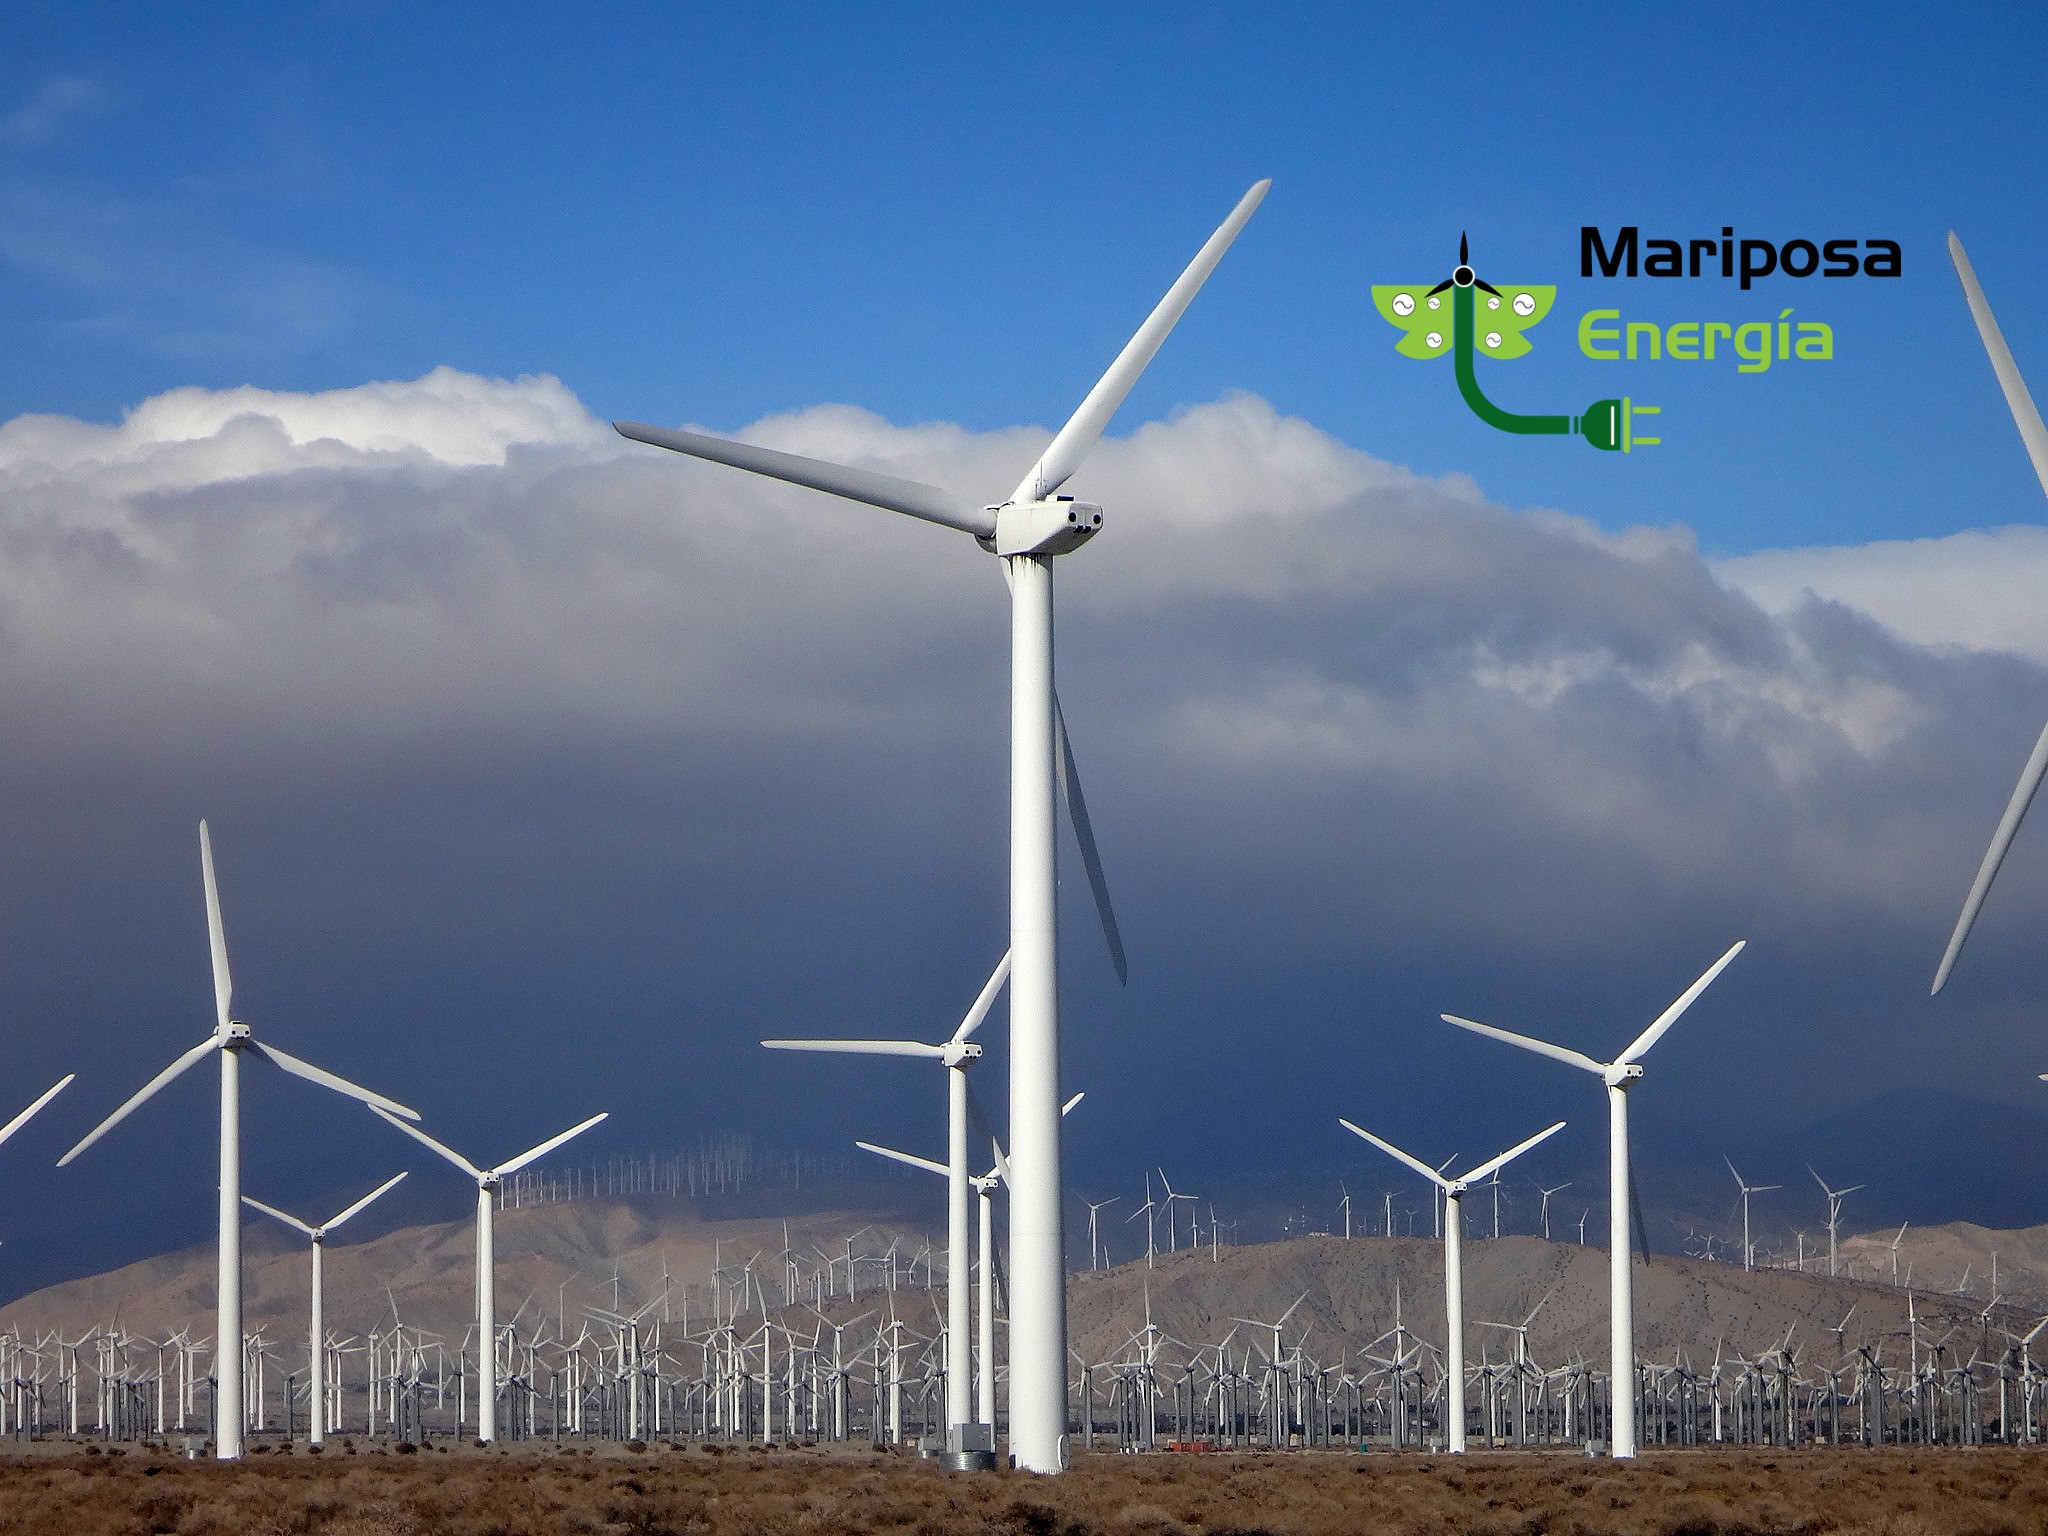 Mariposa Wind Farm Erik Wilde Cc Wikimedia Commons2016